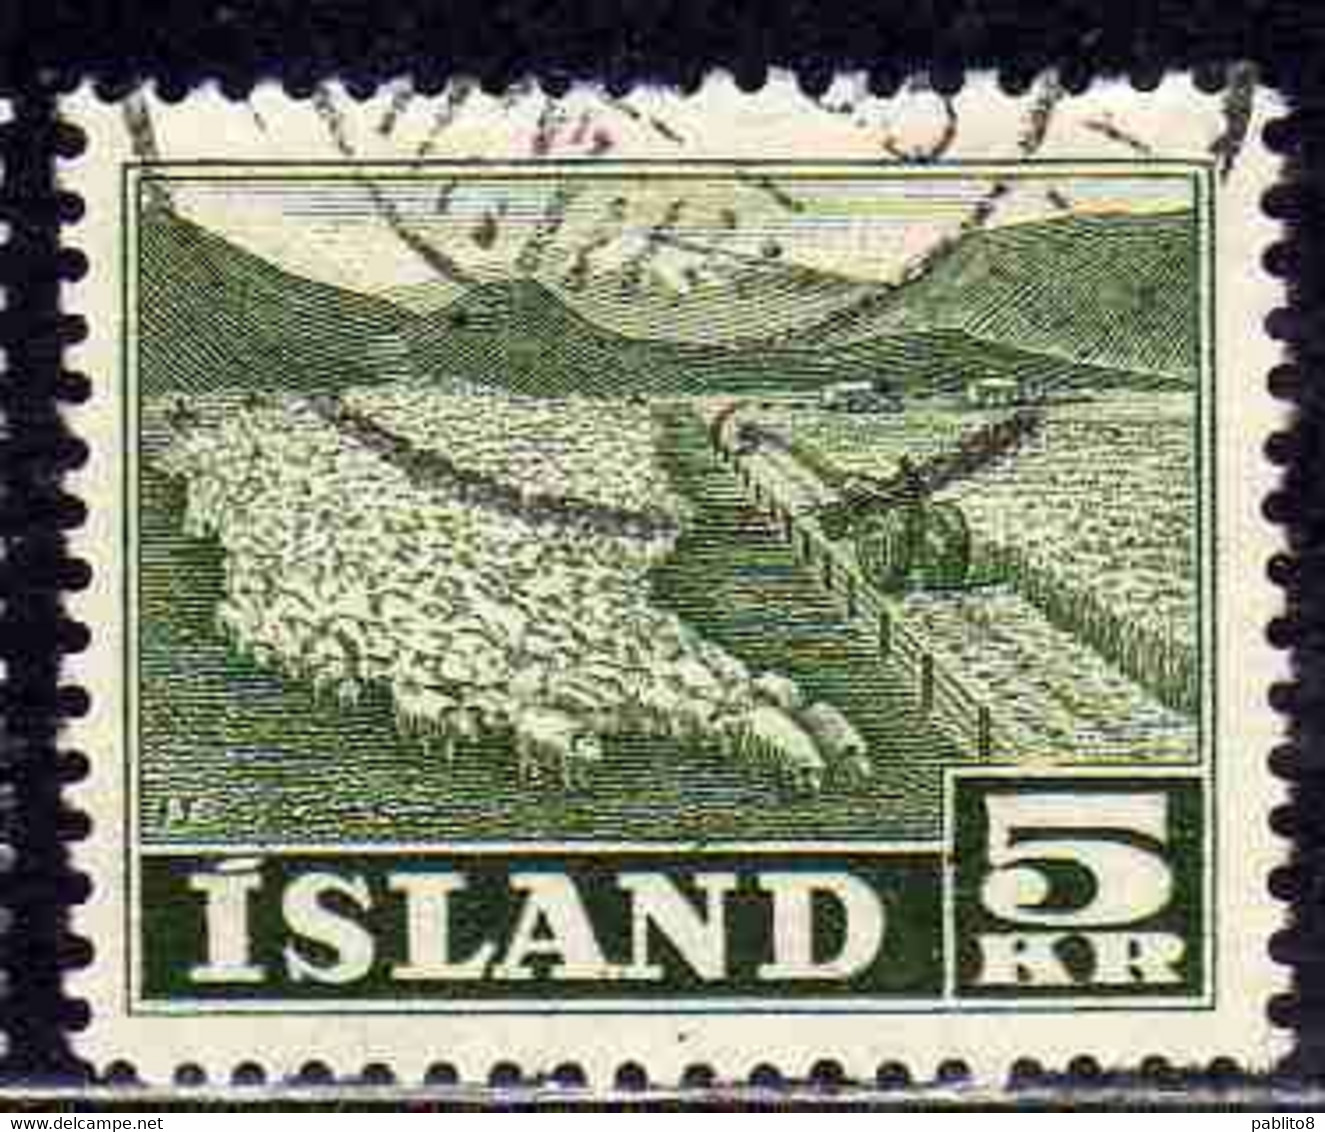 ISLANDA ICELAND ISLANDE 1950 1954 FLOCK OF SHEEP 5k USED USATO OBLITERE' - Used Stamps